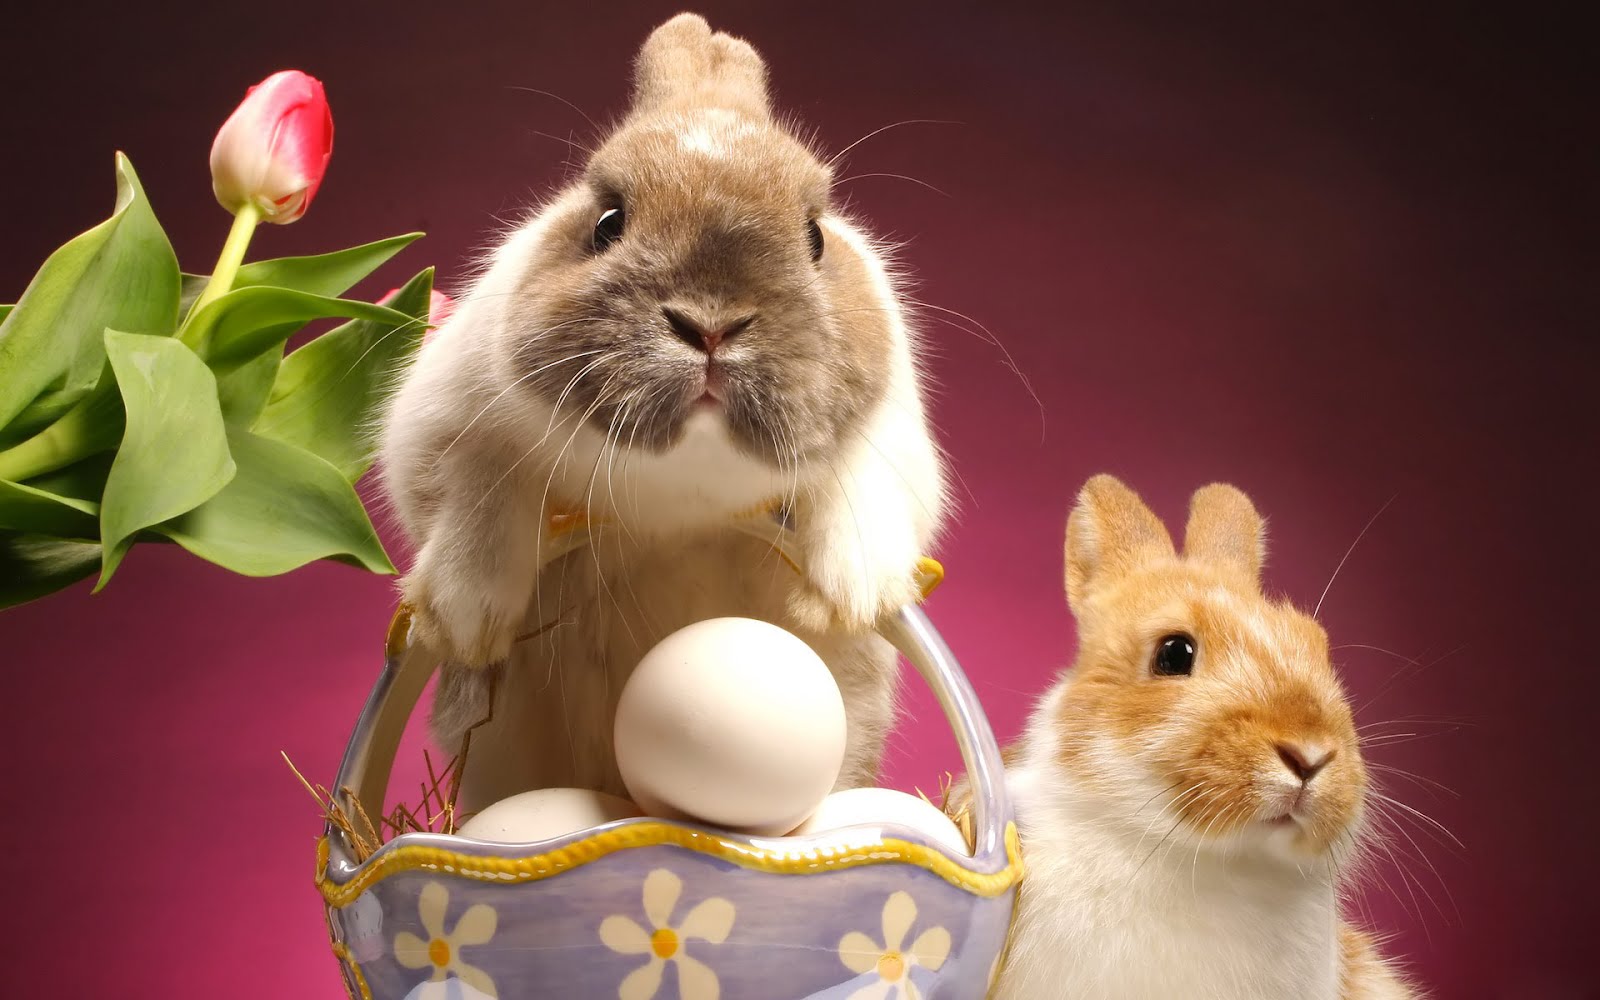 https://blogger.googleusercontent.com/img/b/R29vZ2xl/AVvXsEgTYC1N0SKTmKZLYconHzwH4JP3Z3okT0GUWUkxUd1fTM11aHUBxWOTFSrE6qu4xGz4DRHK2F58kTNYZtCjMuZIE9RkmZr1nlFR108pLD0IZVLbKxv4iEwbS560cymq8AqhTi2A9fD-mcIK/s1600/Cute_Easter_Bunny_Rabbit_HD_Wallpaper.jpg